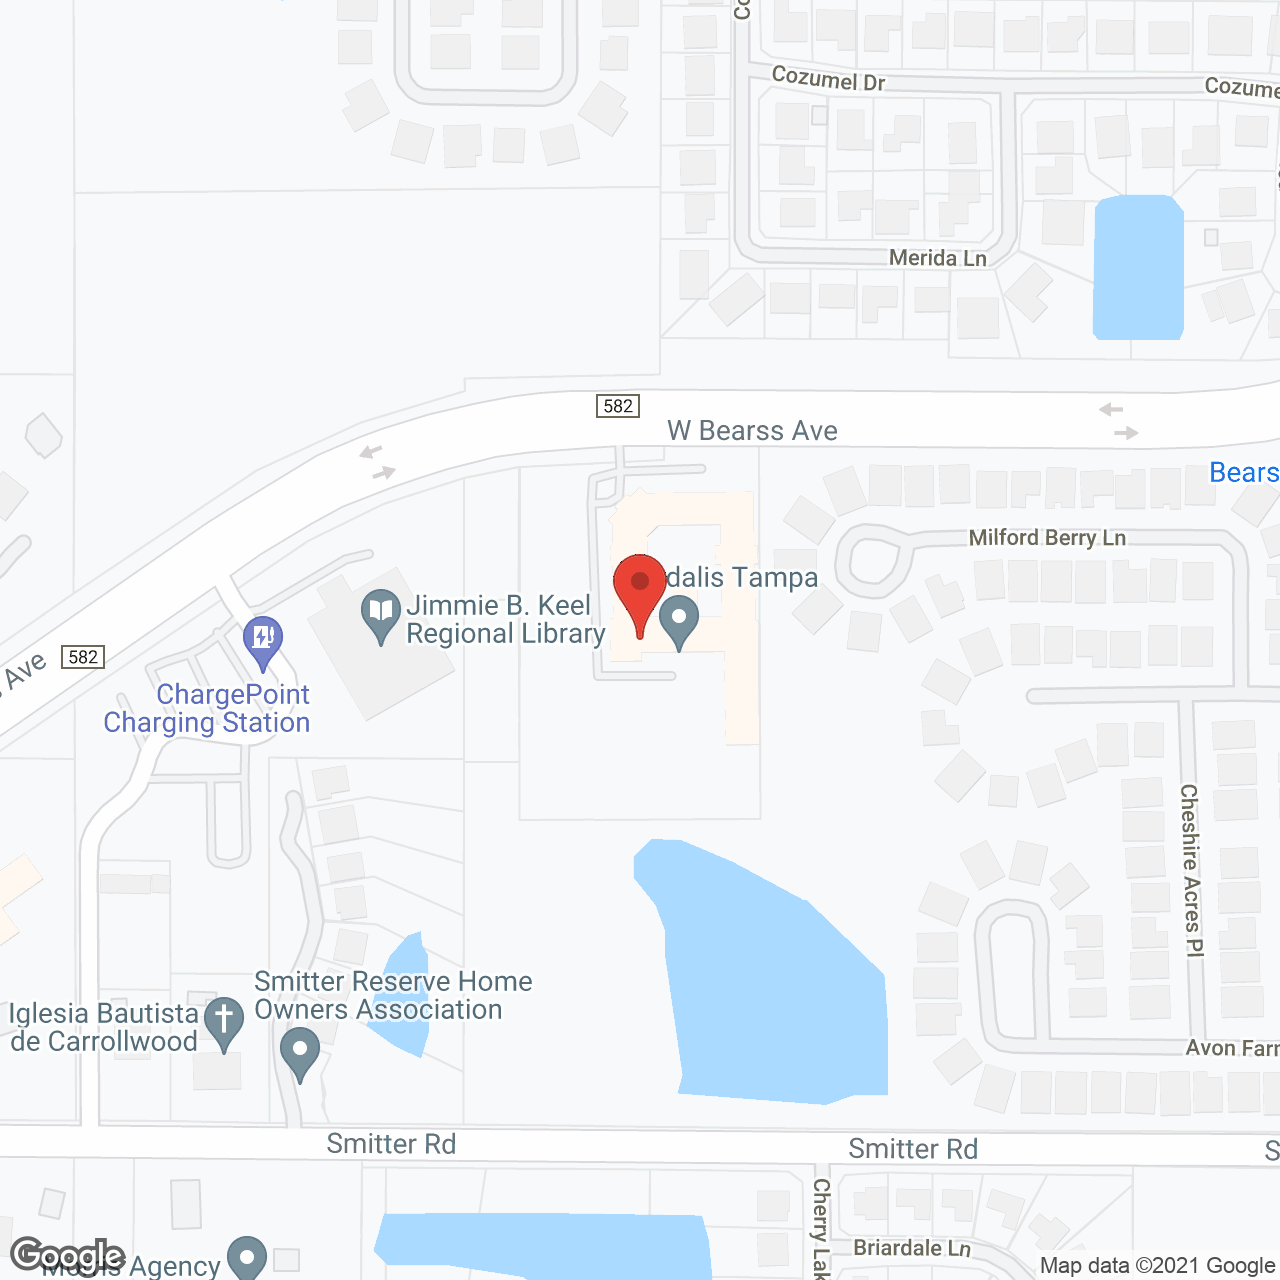 Sodalis Tampa in google map